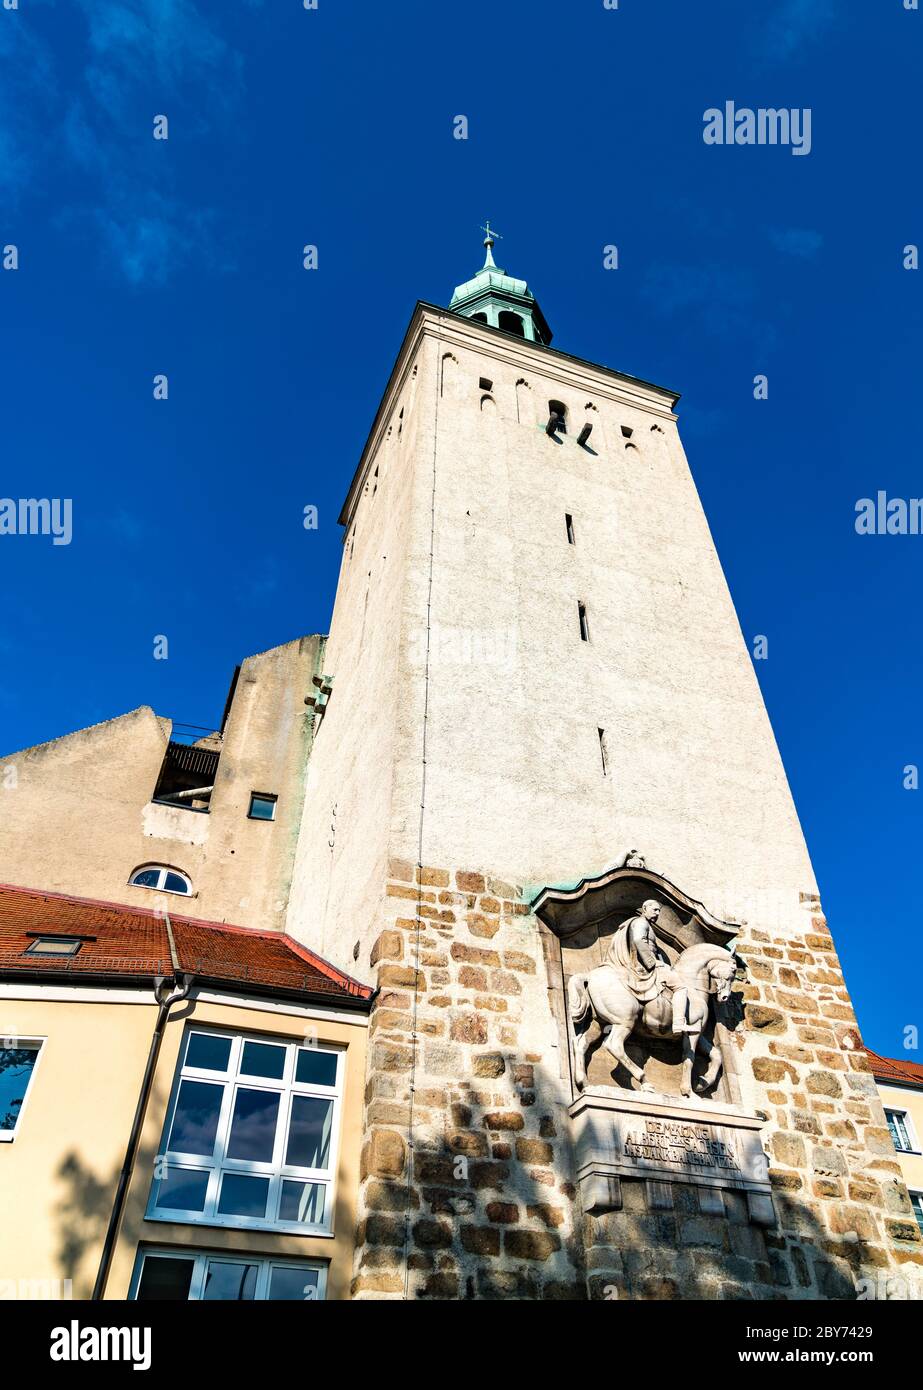 Lauenturm tower in Bautzen, Germany Stock Photo